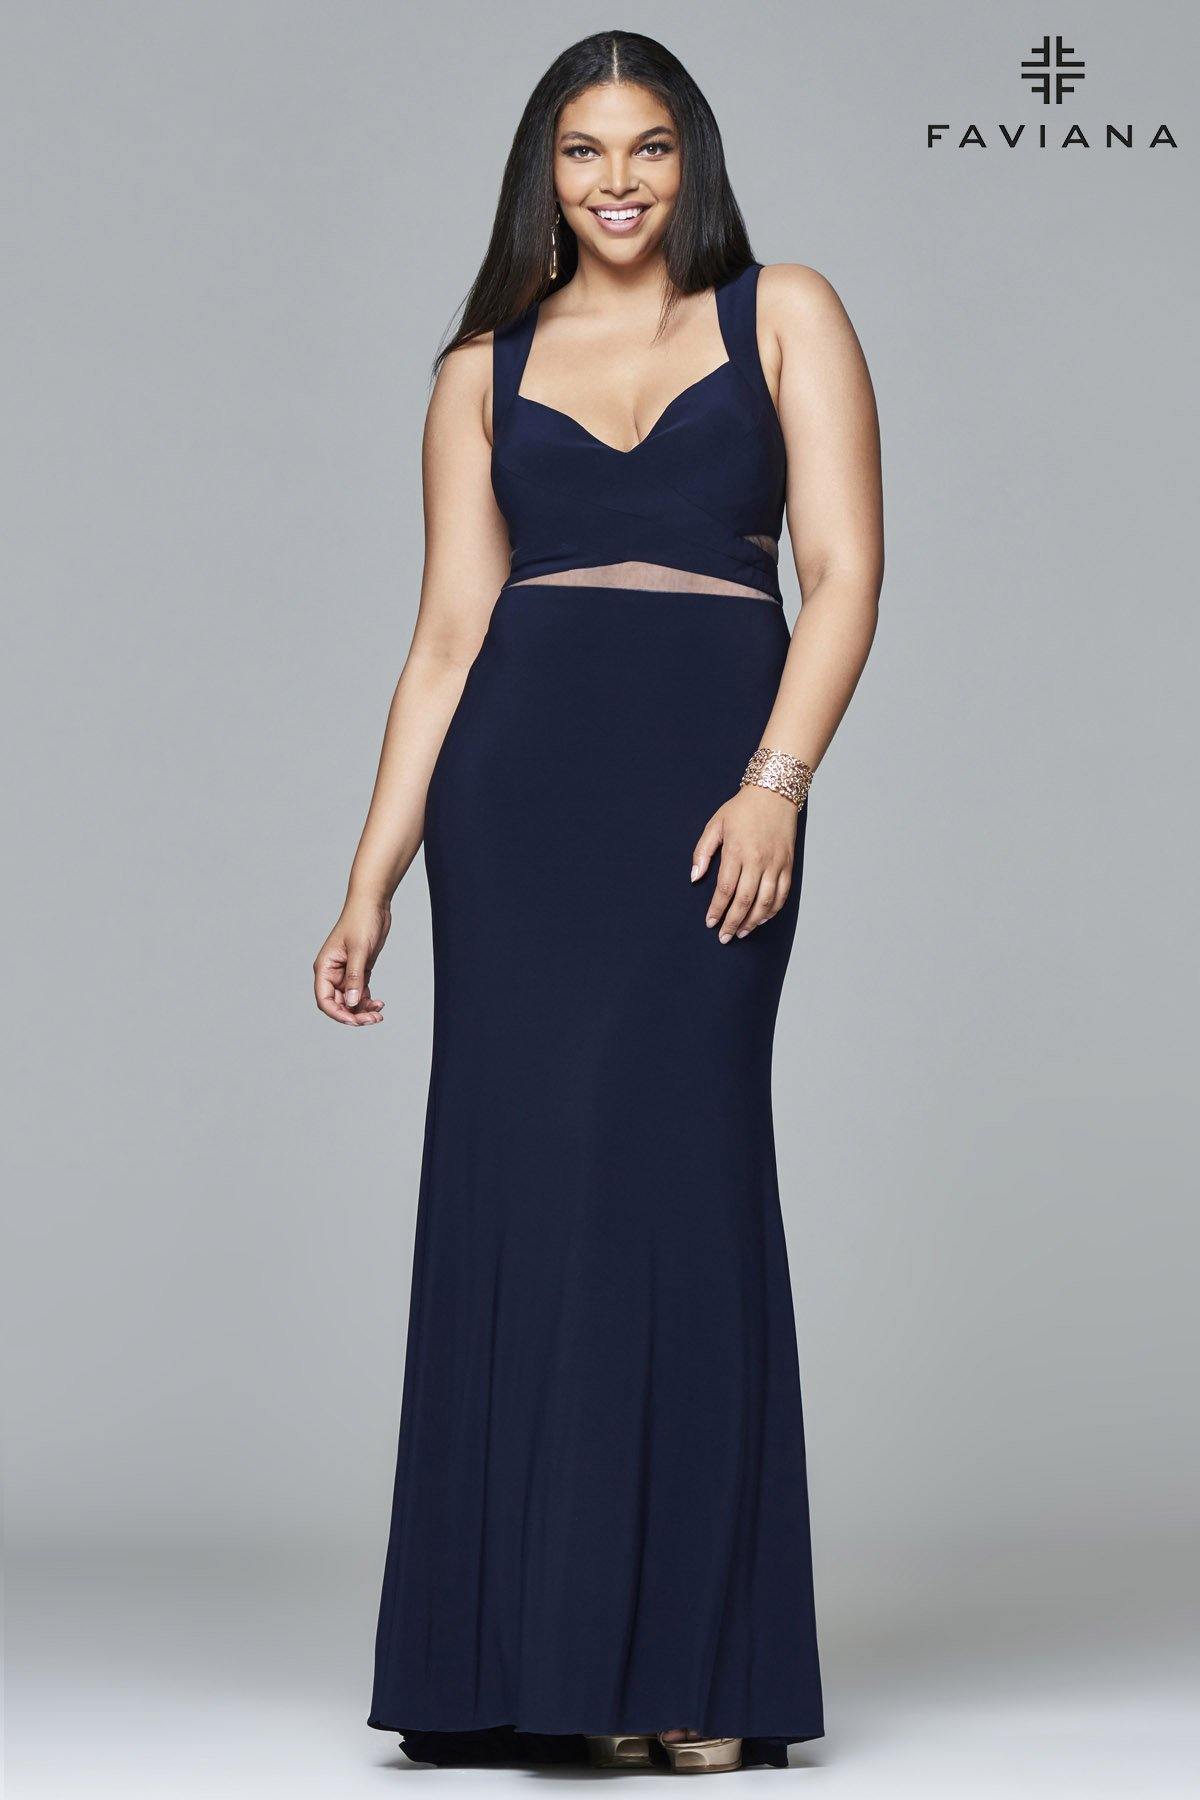 Faviana 9399 Sleek Long Plus Size Formal Dress - The Dress Outlet Faviana